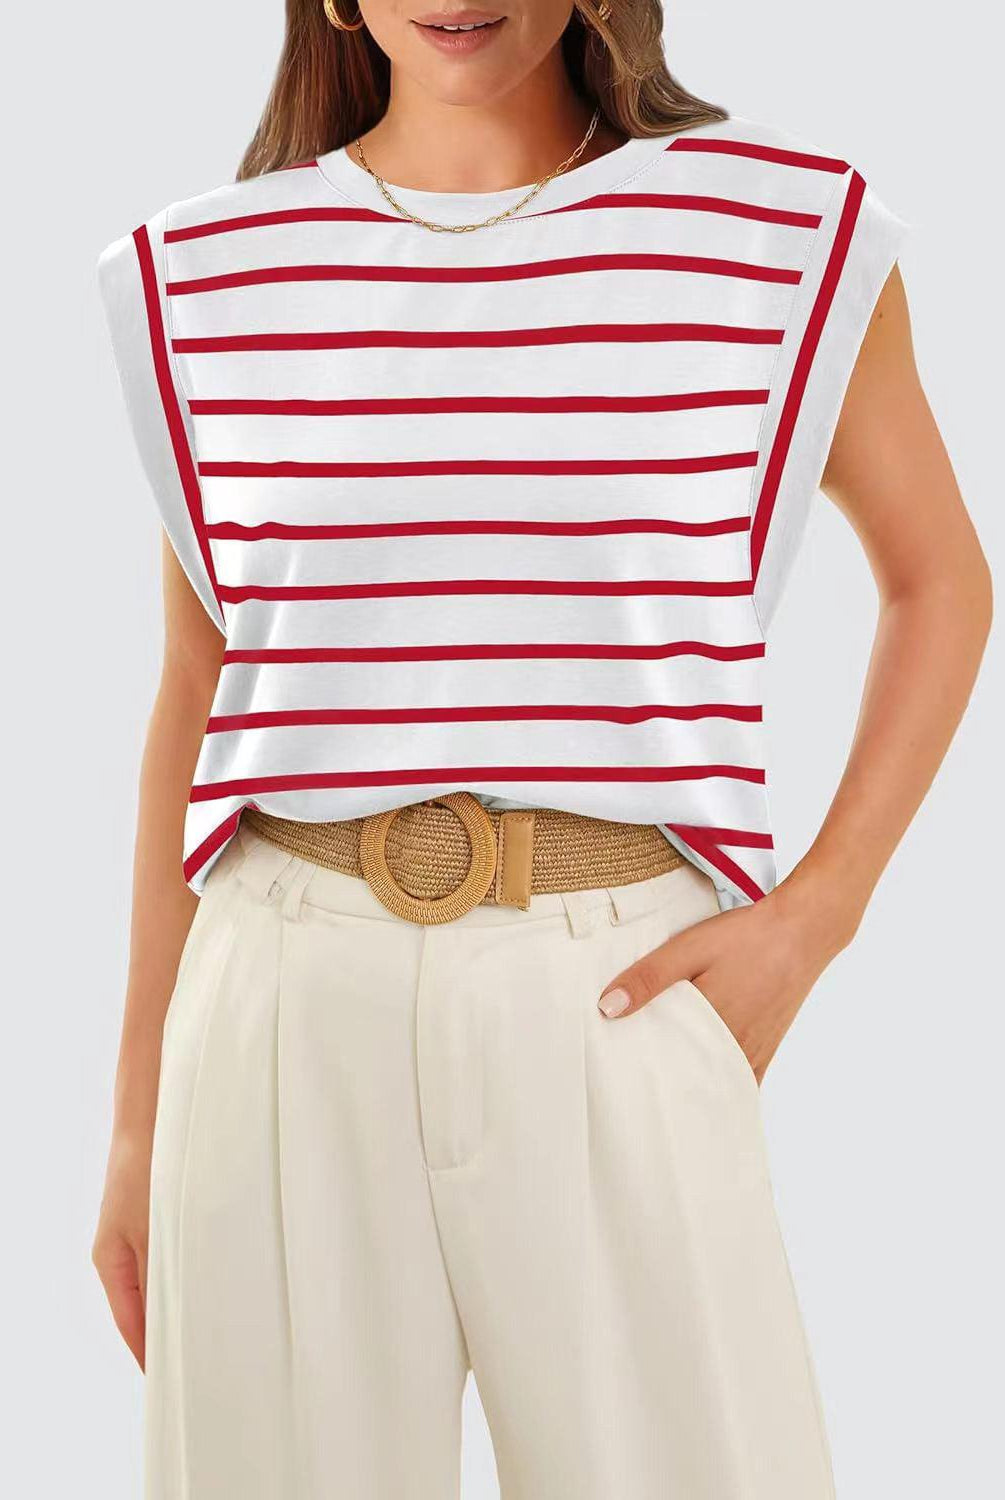 Women's Shirts Striped Round Neck Cap Sleeve T-Shirt